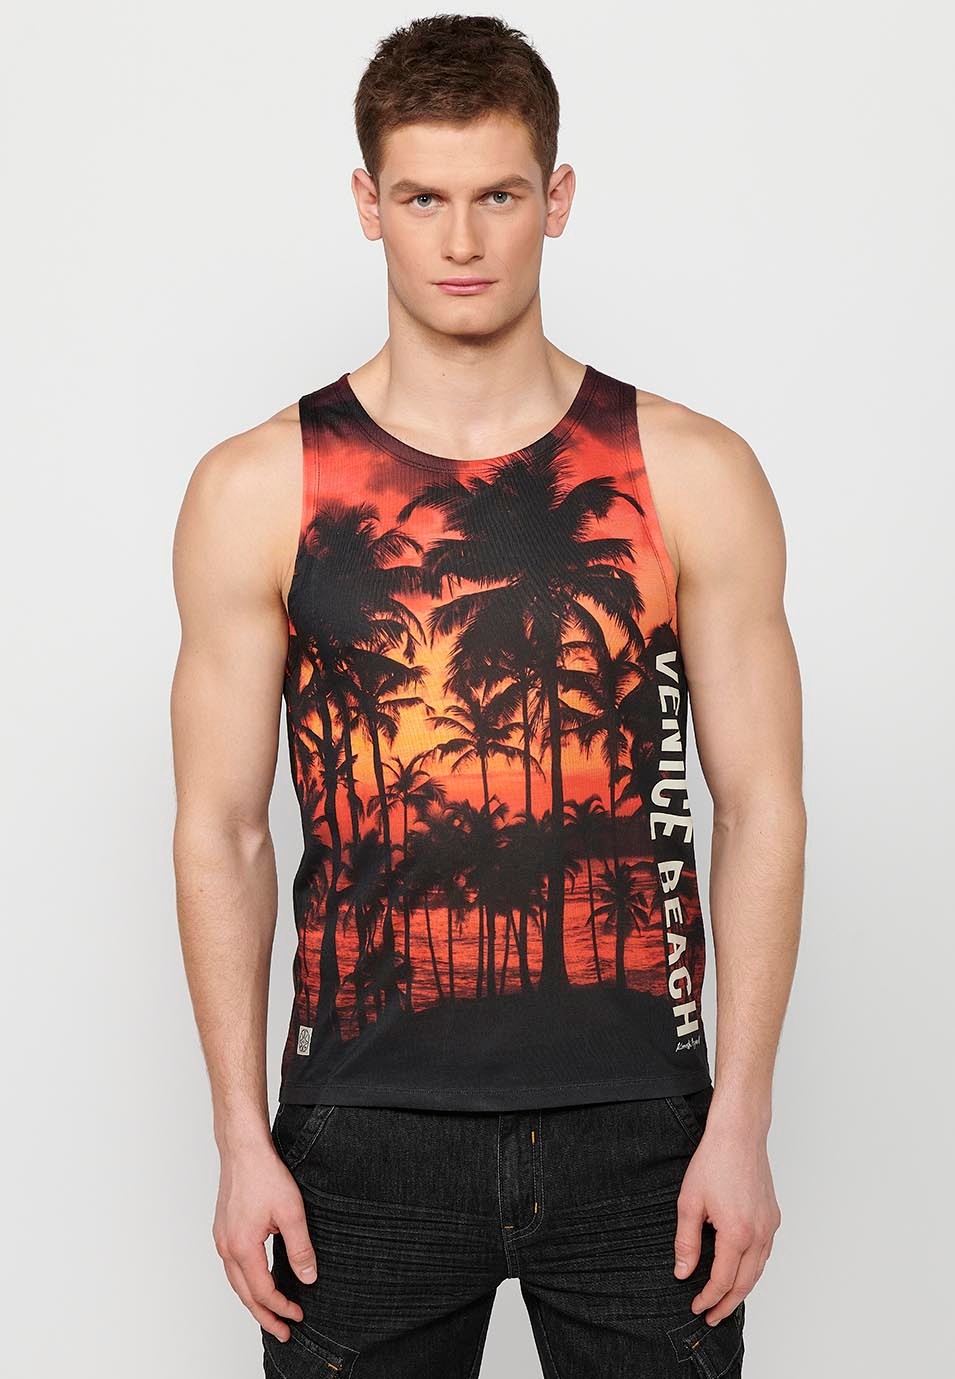 Camiseta de tirantes, estampado venice beach, color negro para hombres